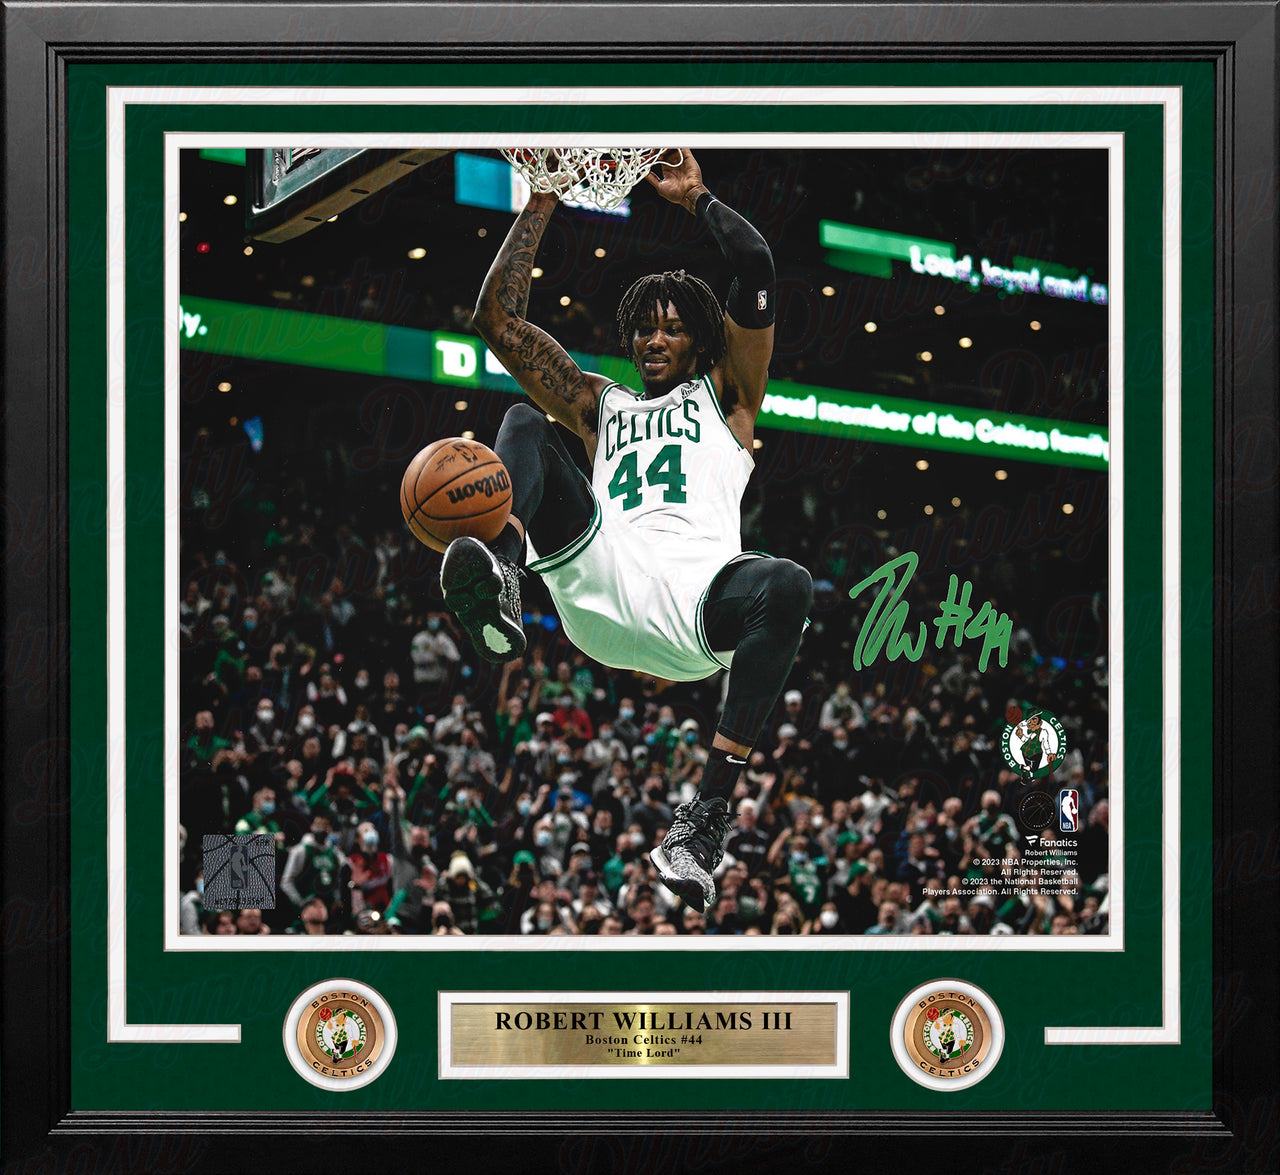 Robert Williams III Slam Dunk Boston Celtics Autographed Framed Basketball Photo - Dynasty Sports & Framing 